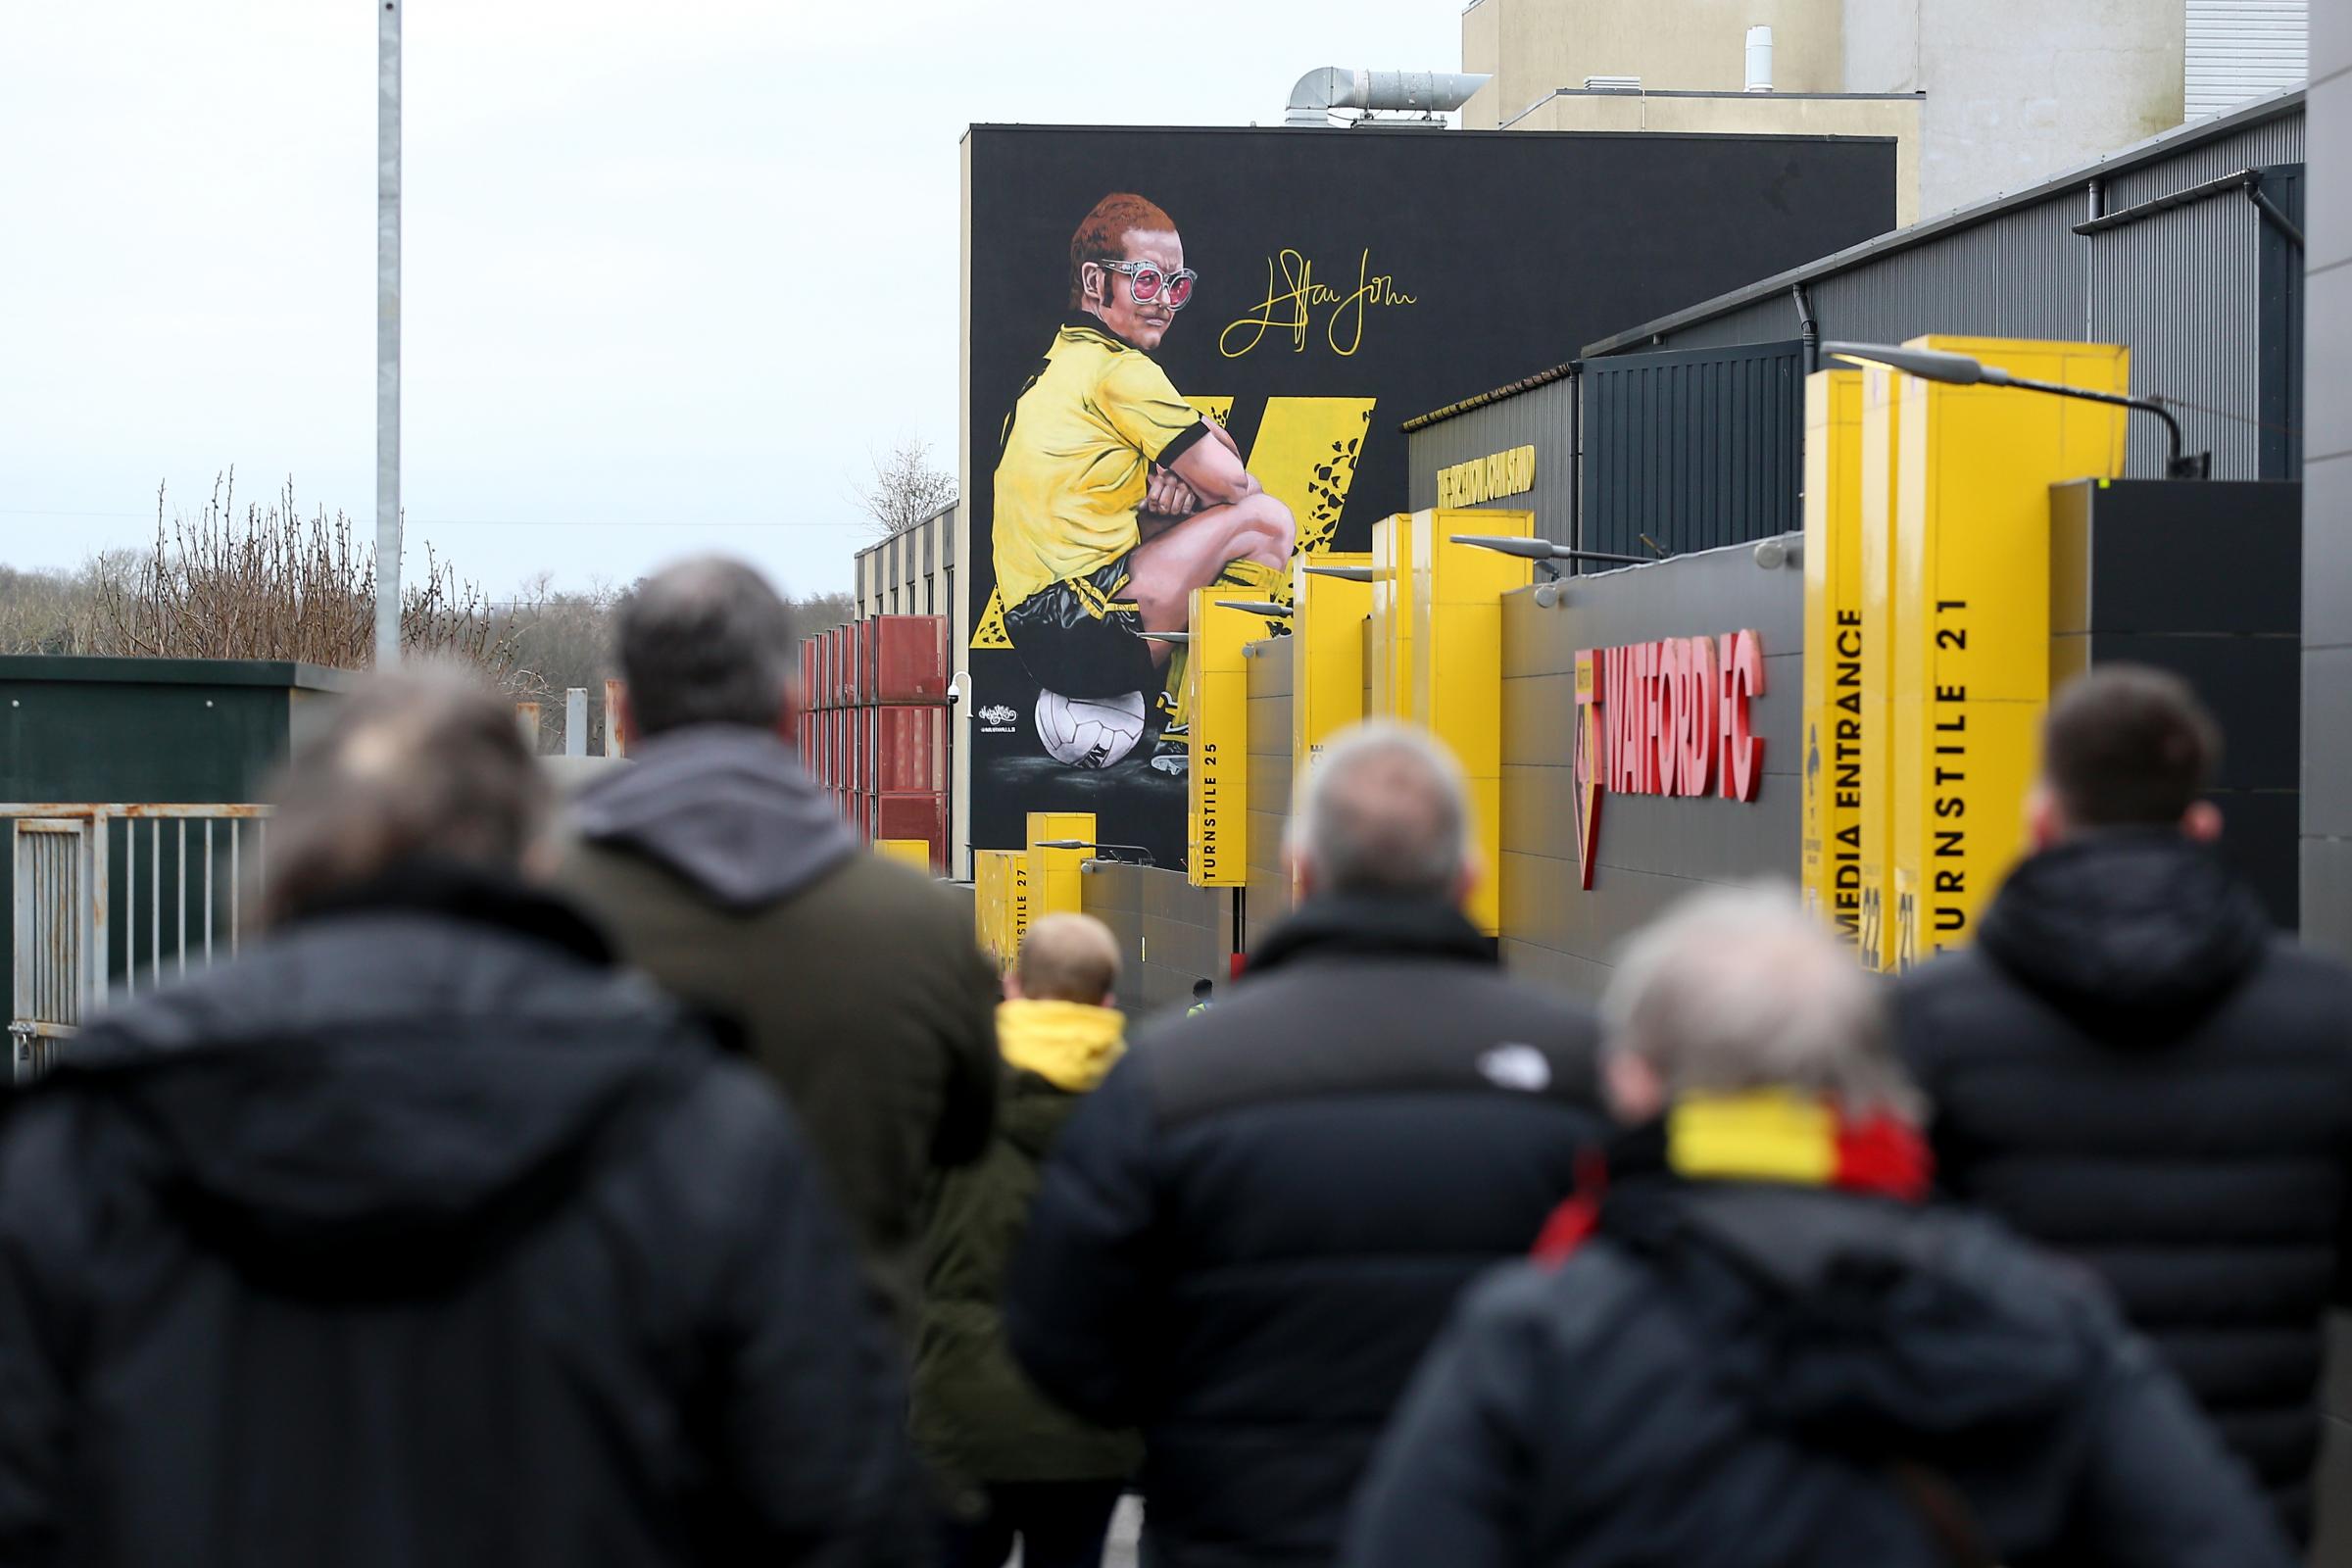 Watford have seen more than 12,000 season ticket renewals